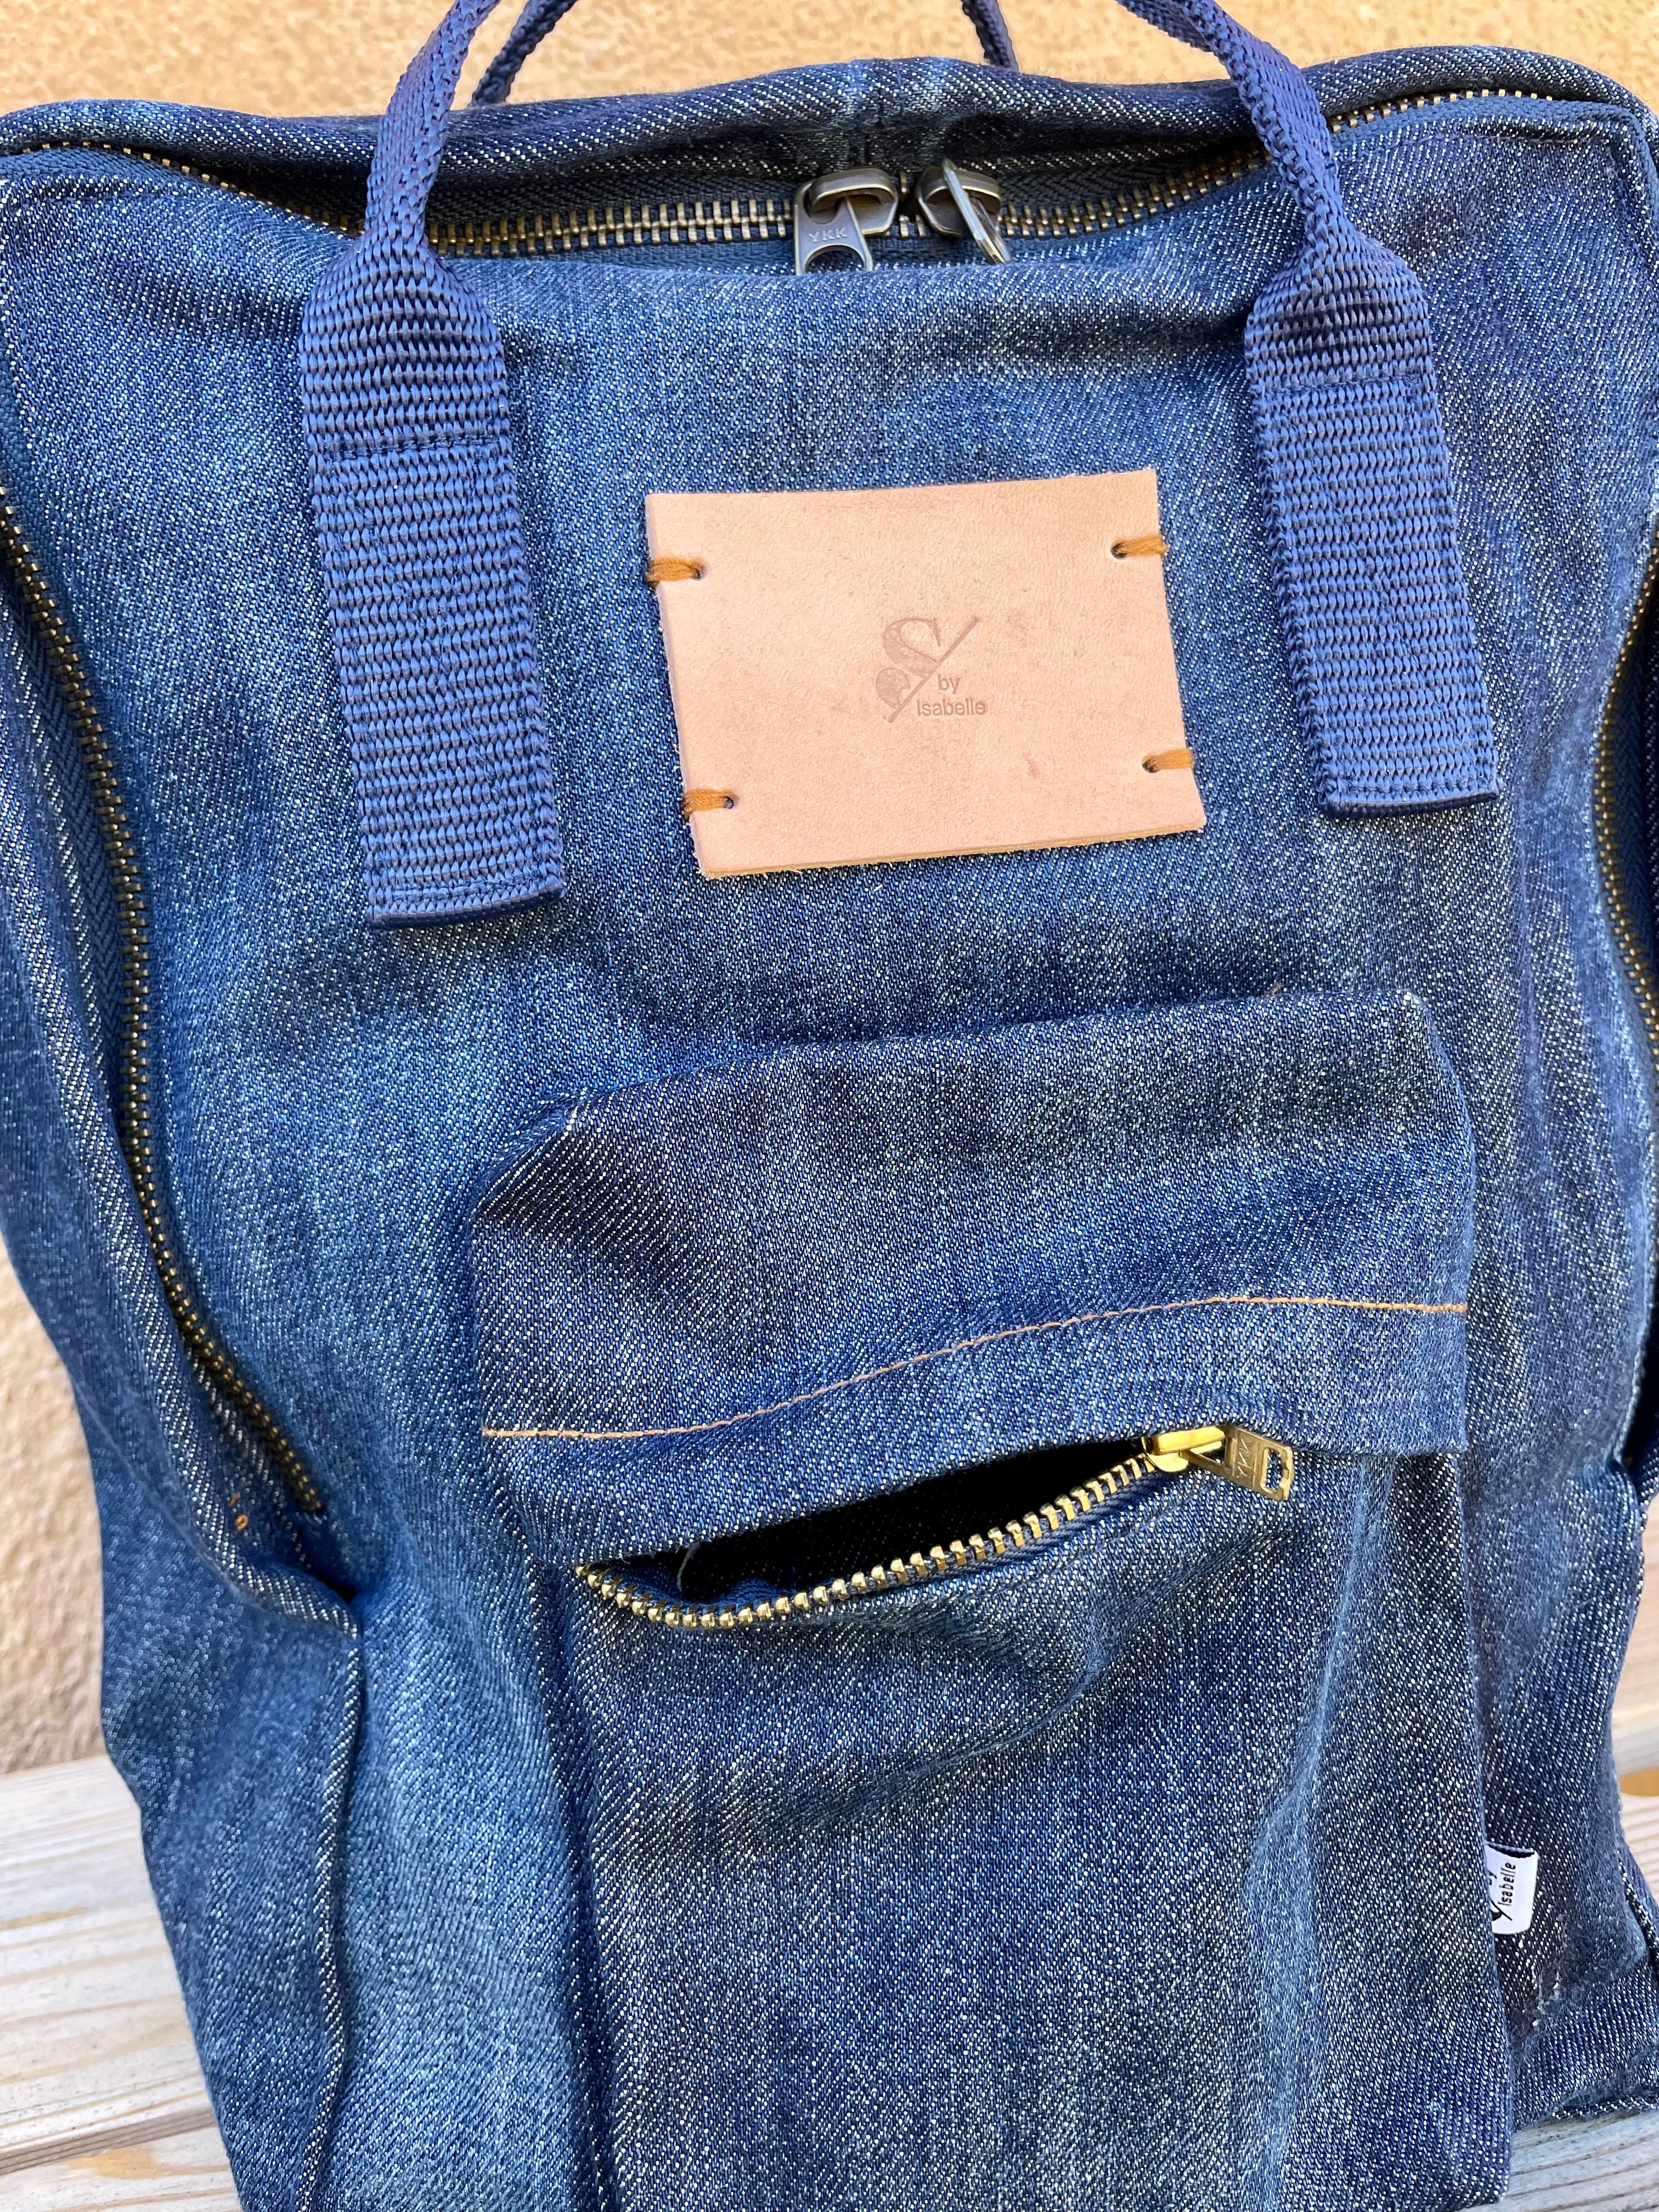 DIY backpack from old jeans/ fjallraven kanken inspired - YouTube | Diy  backpack, Old jeans recycle, Diy backpack pattern